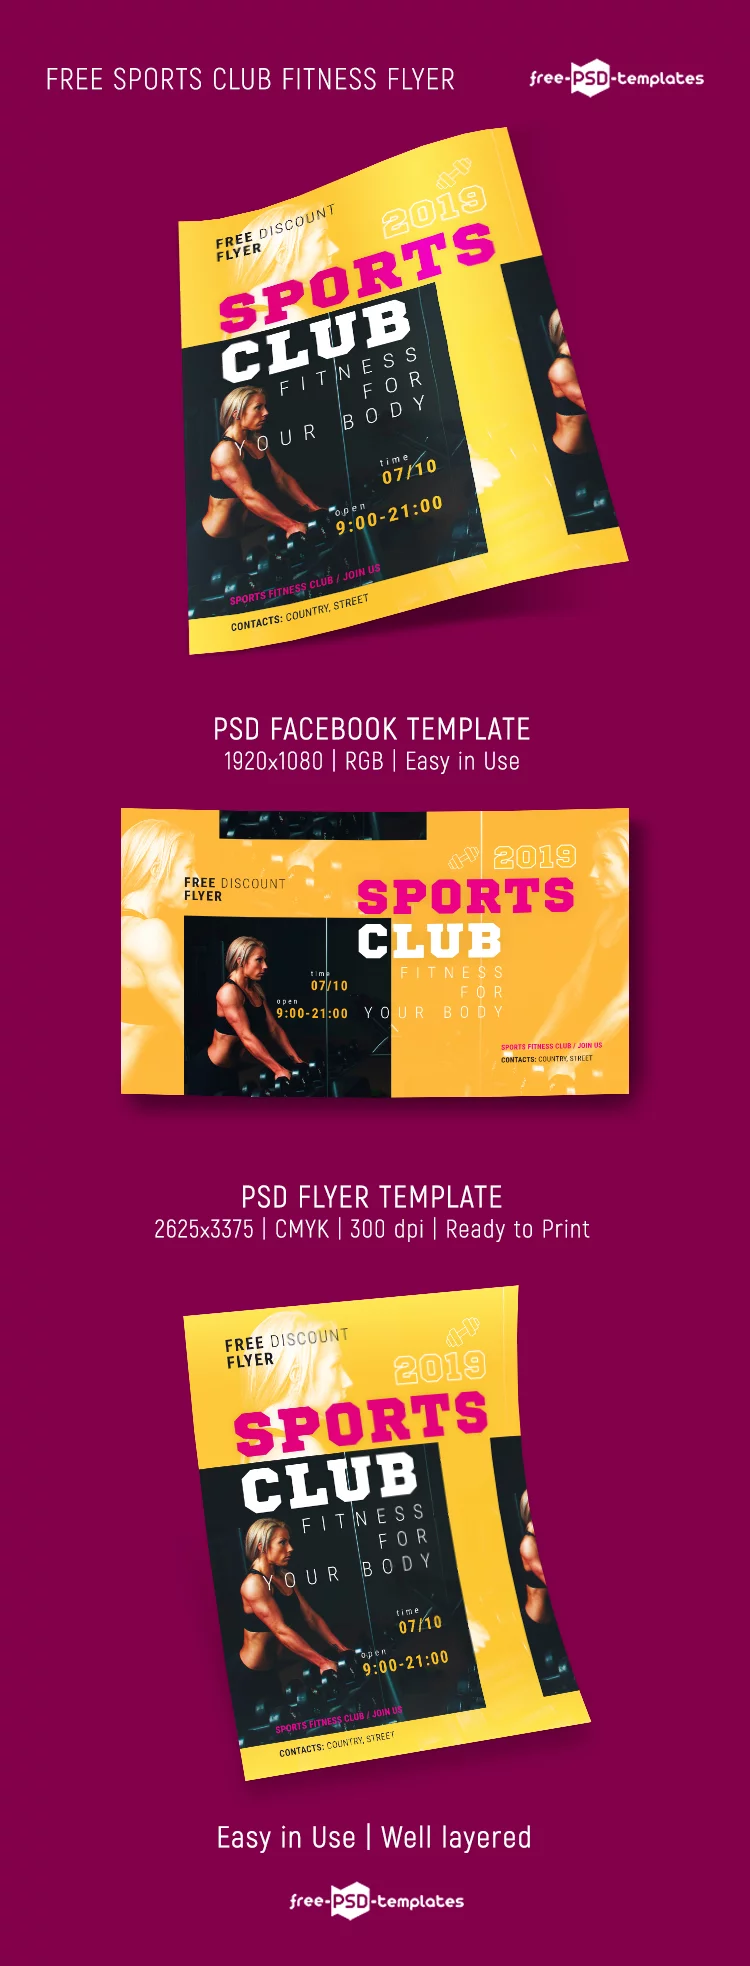 Free Sports Club Fitness Flyer